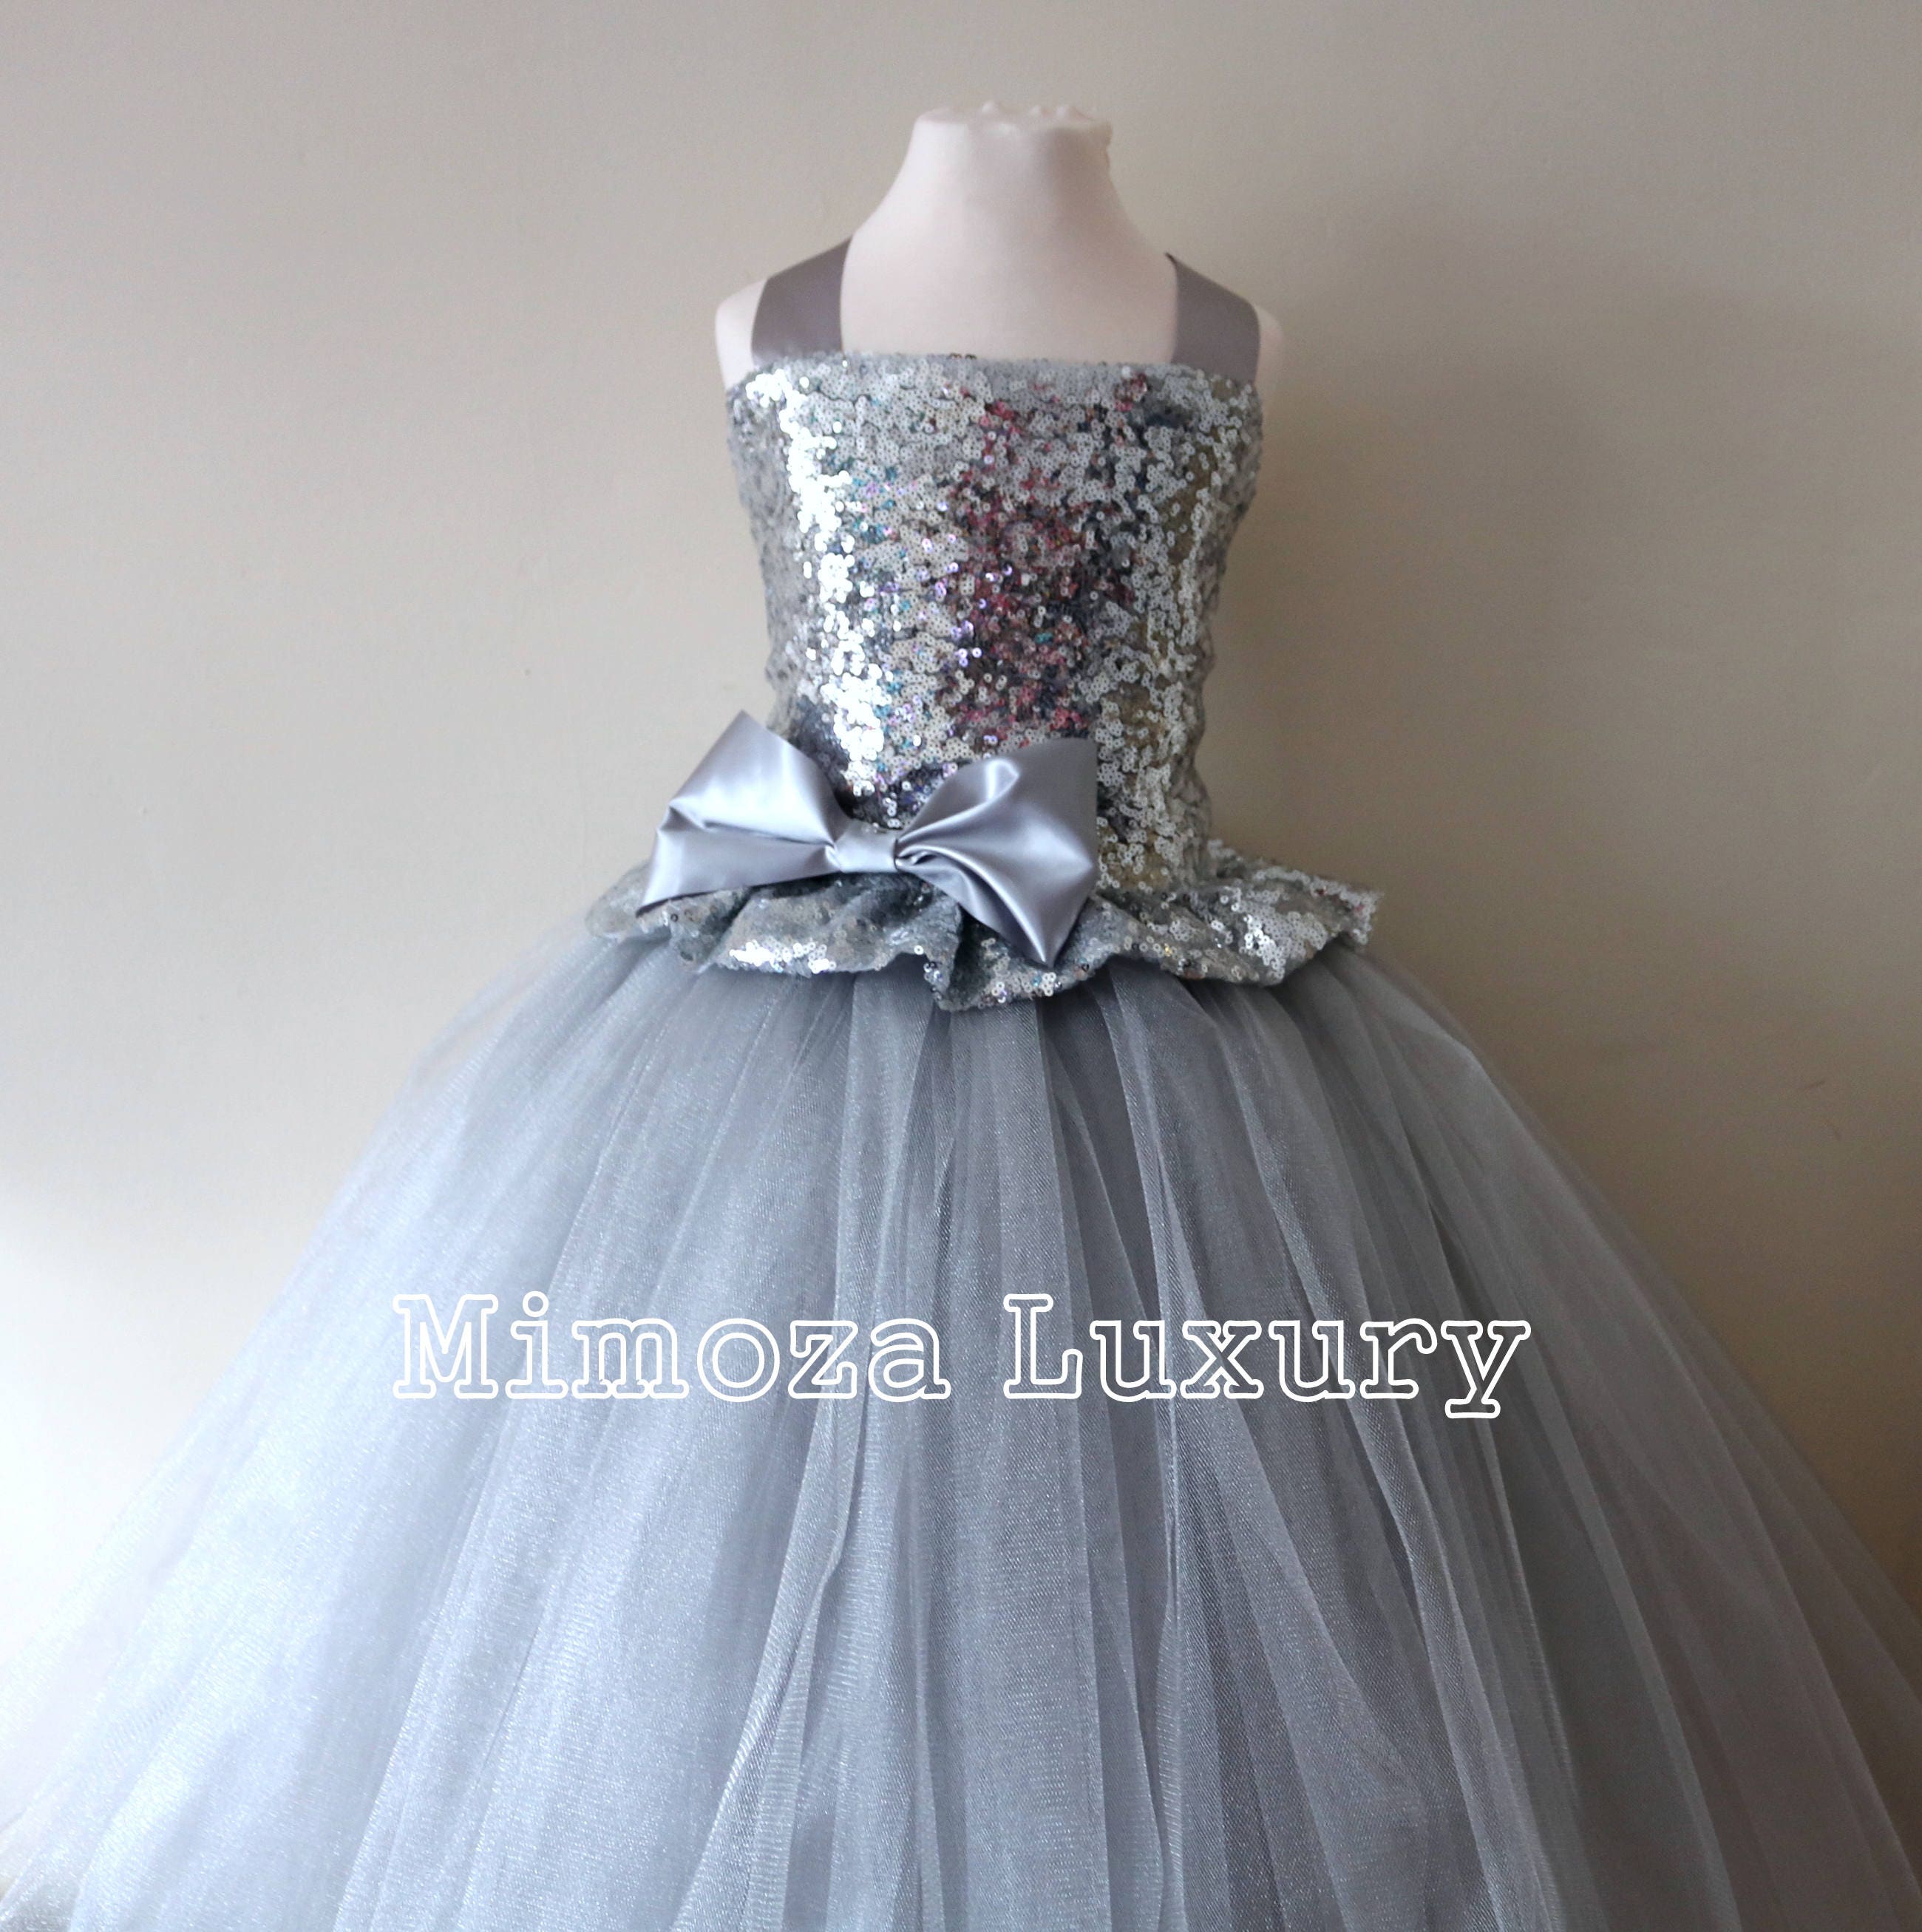 silver sequin bridesmaid dresses uk